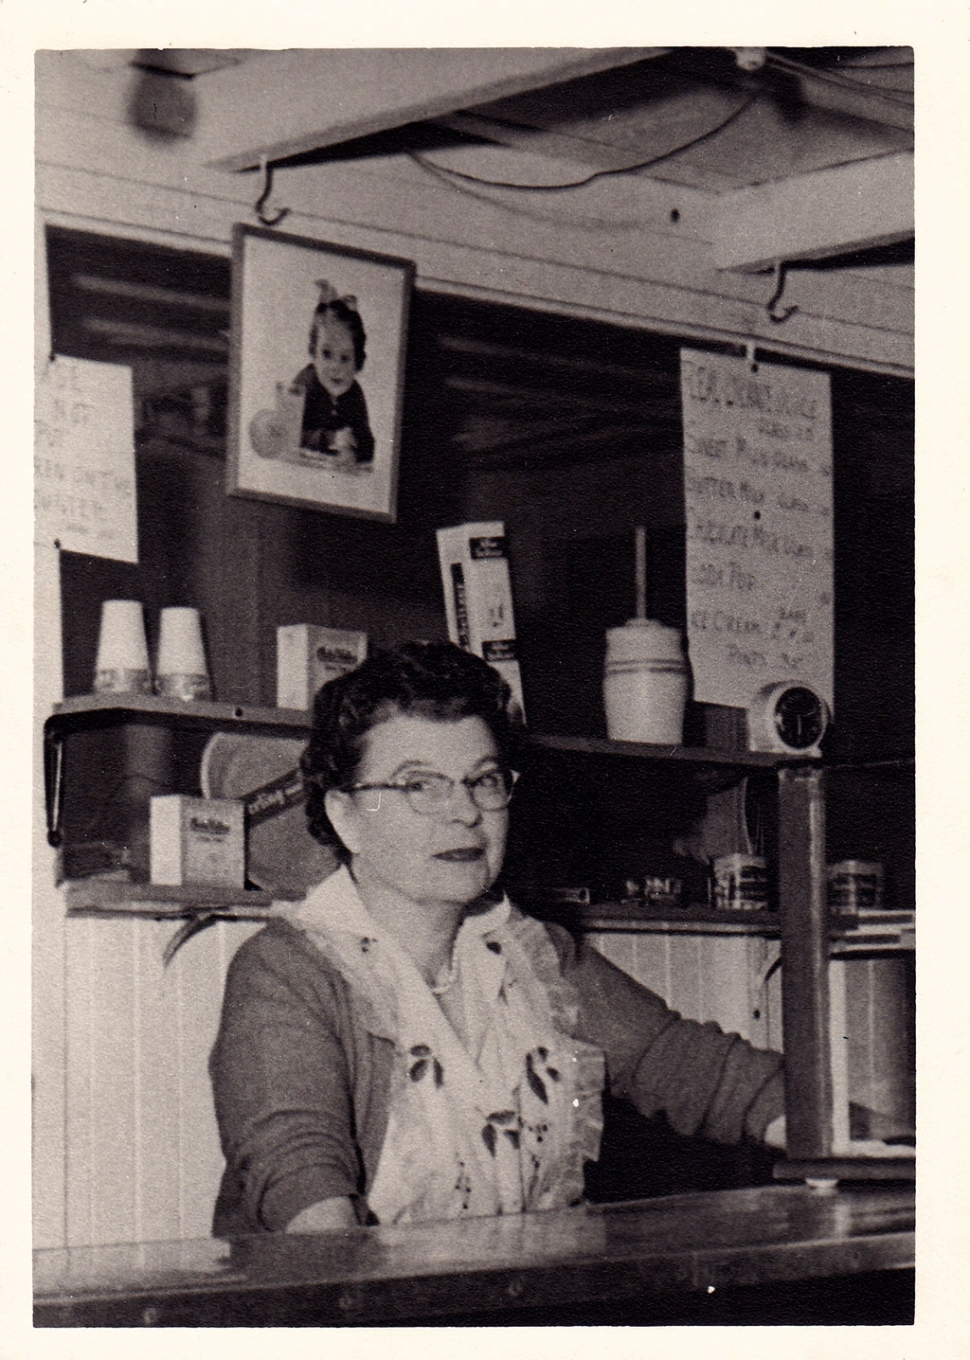 Elvira Hardison at food stand, 1955.